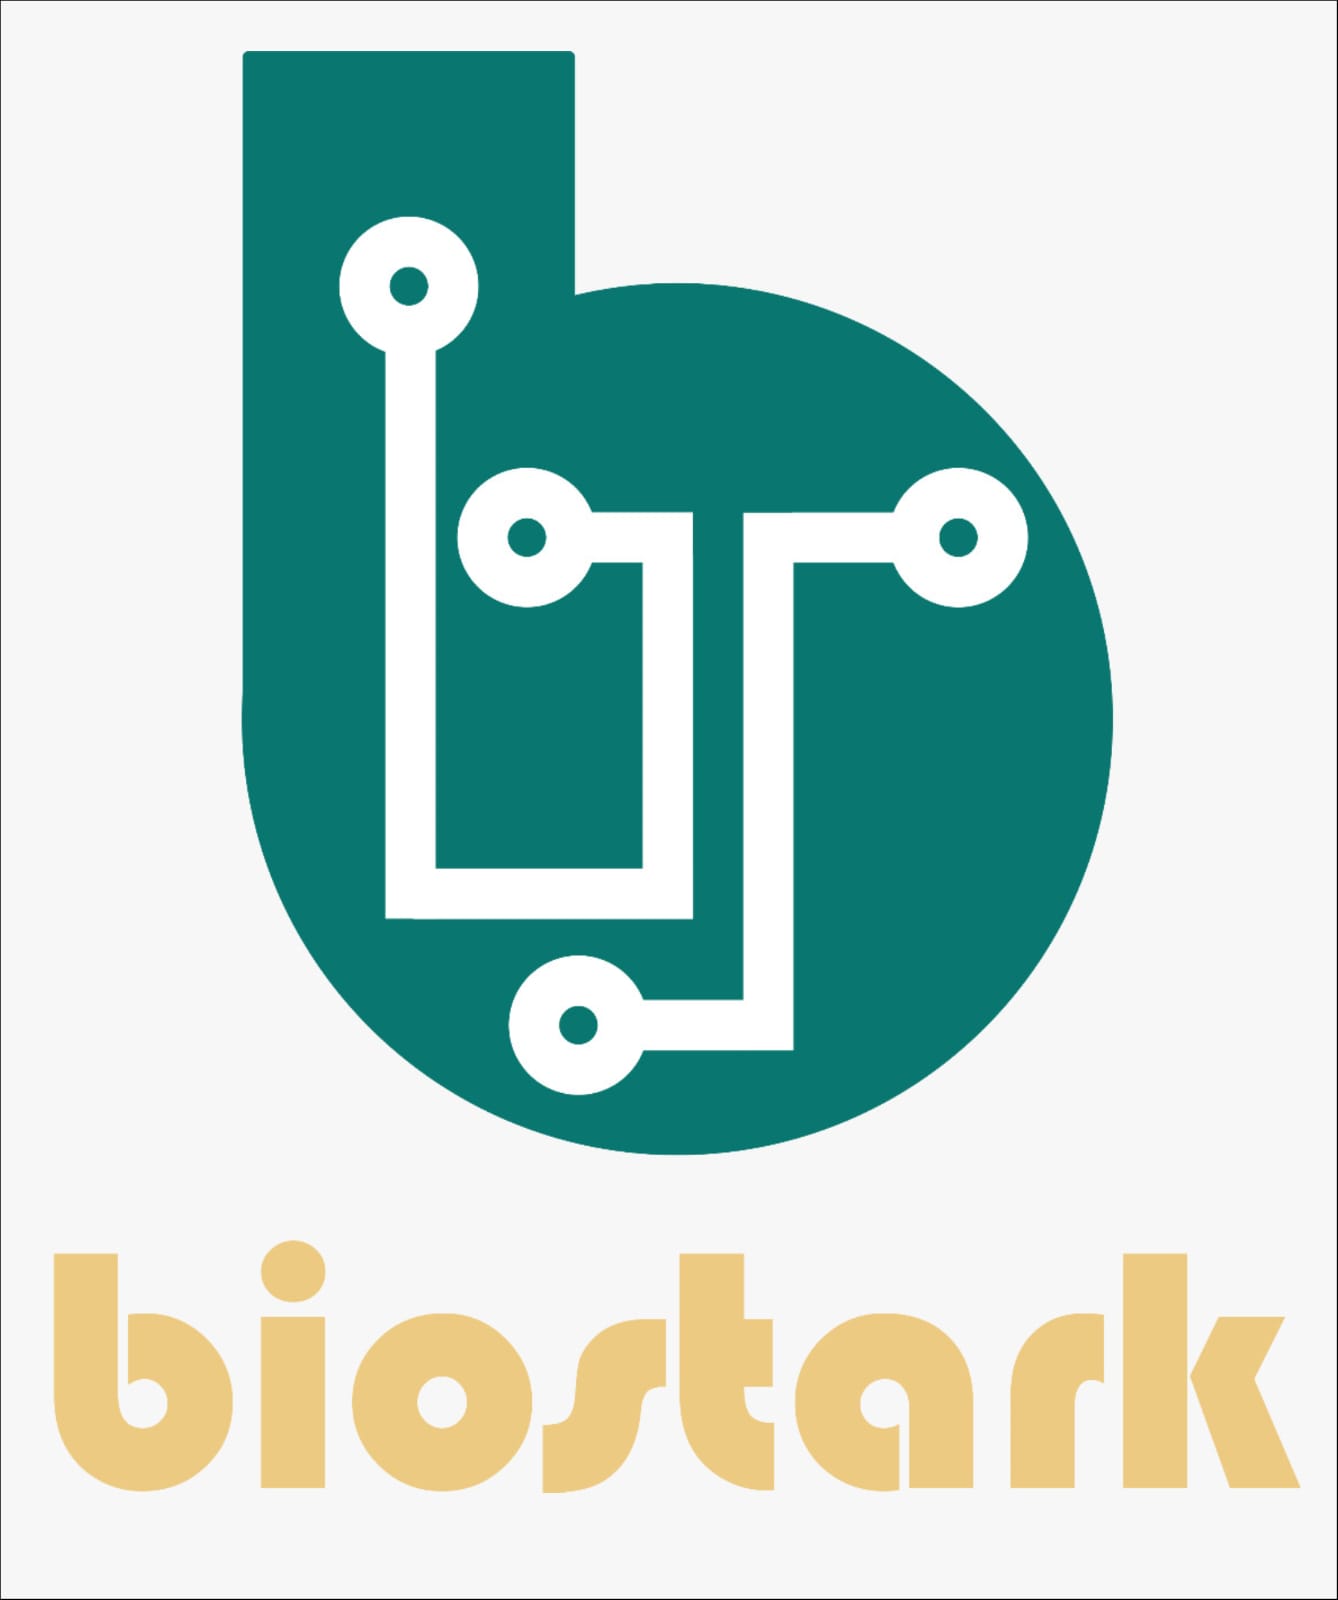 Biostark